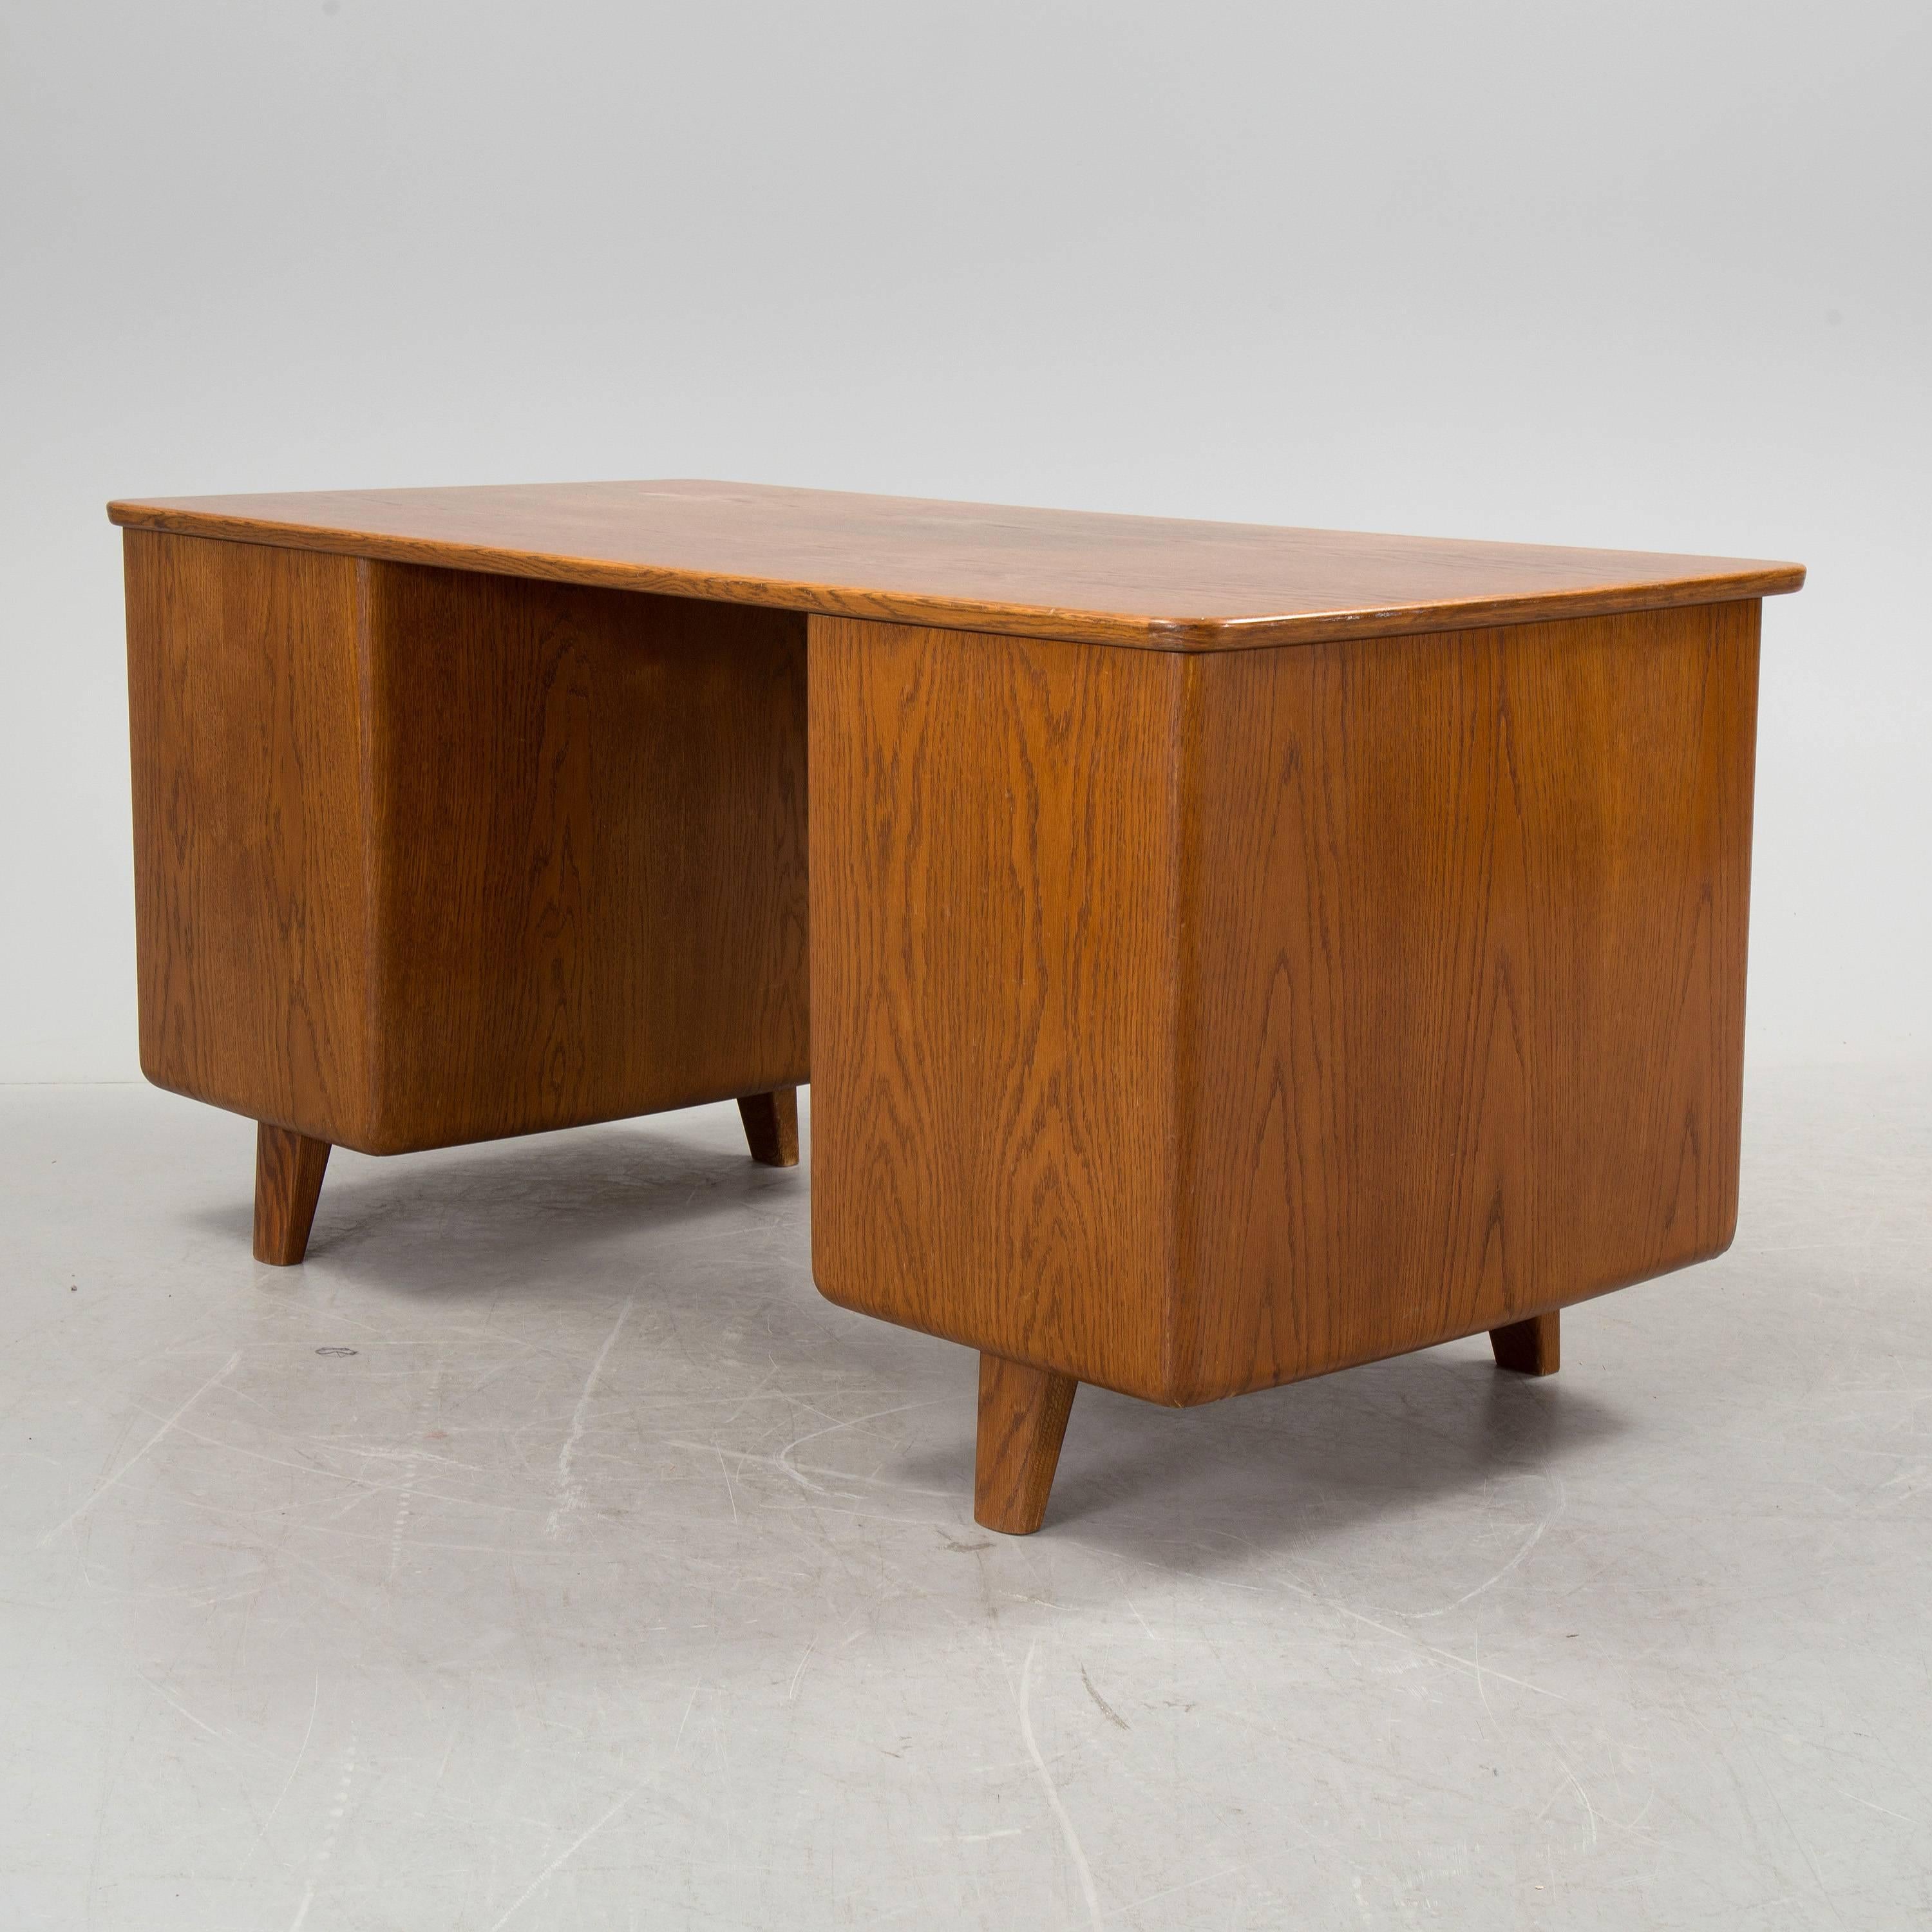 20th Century Swedish Art Deco Desk and Swivel Chair by Gunnar Ericsson for Facit Atvidaberg